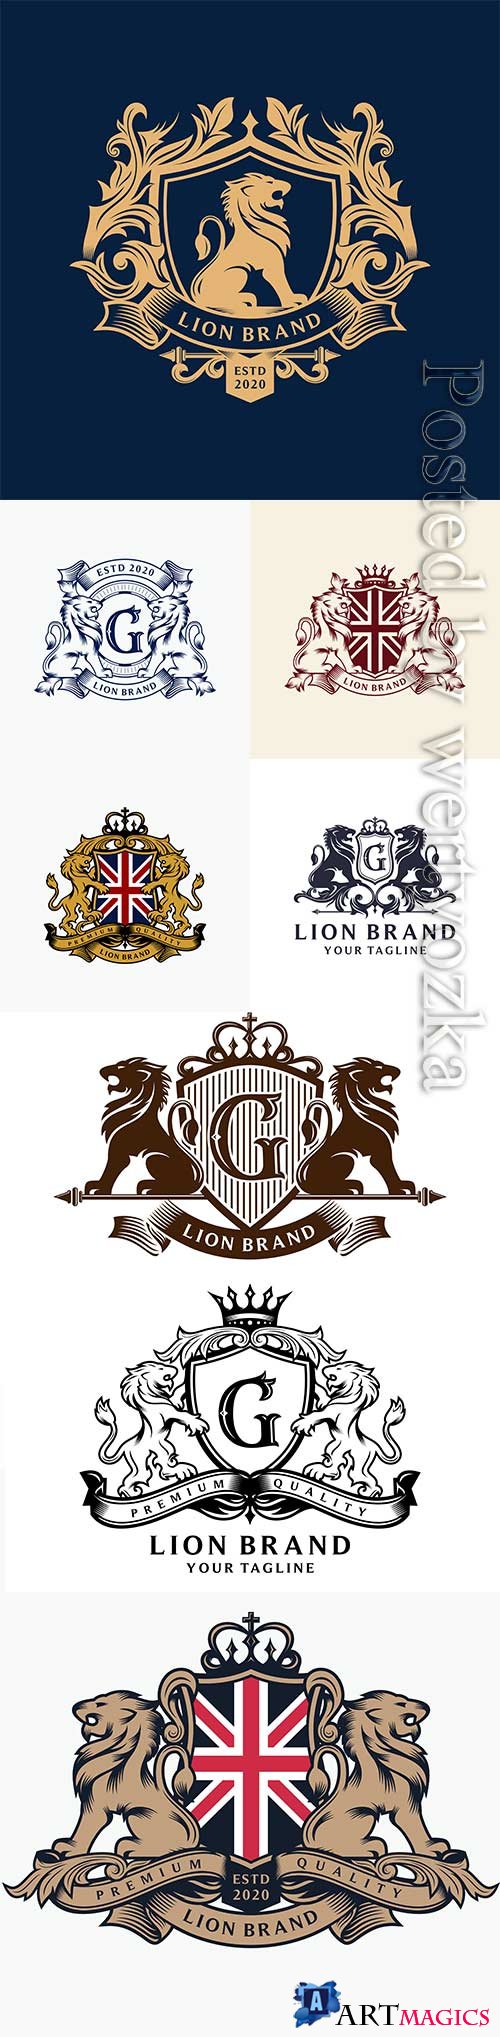 Heraldry lion brand logo design premium vector